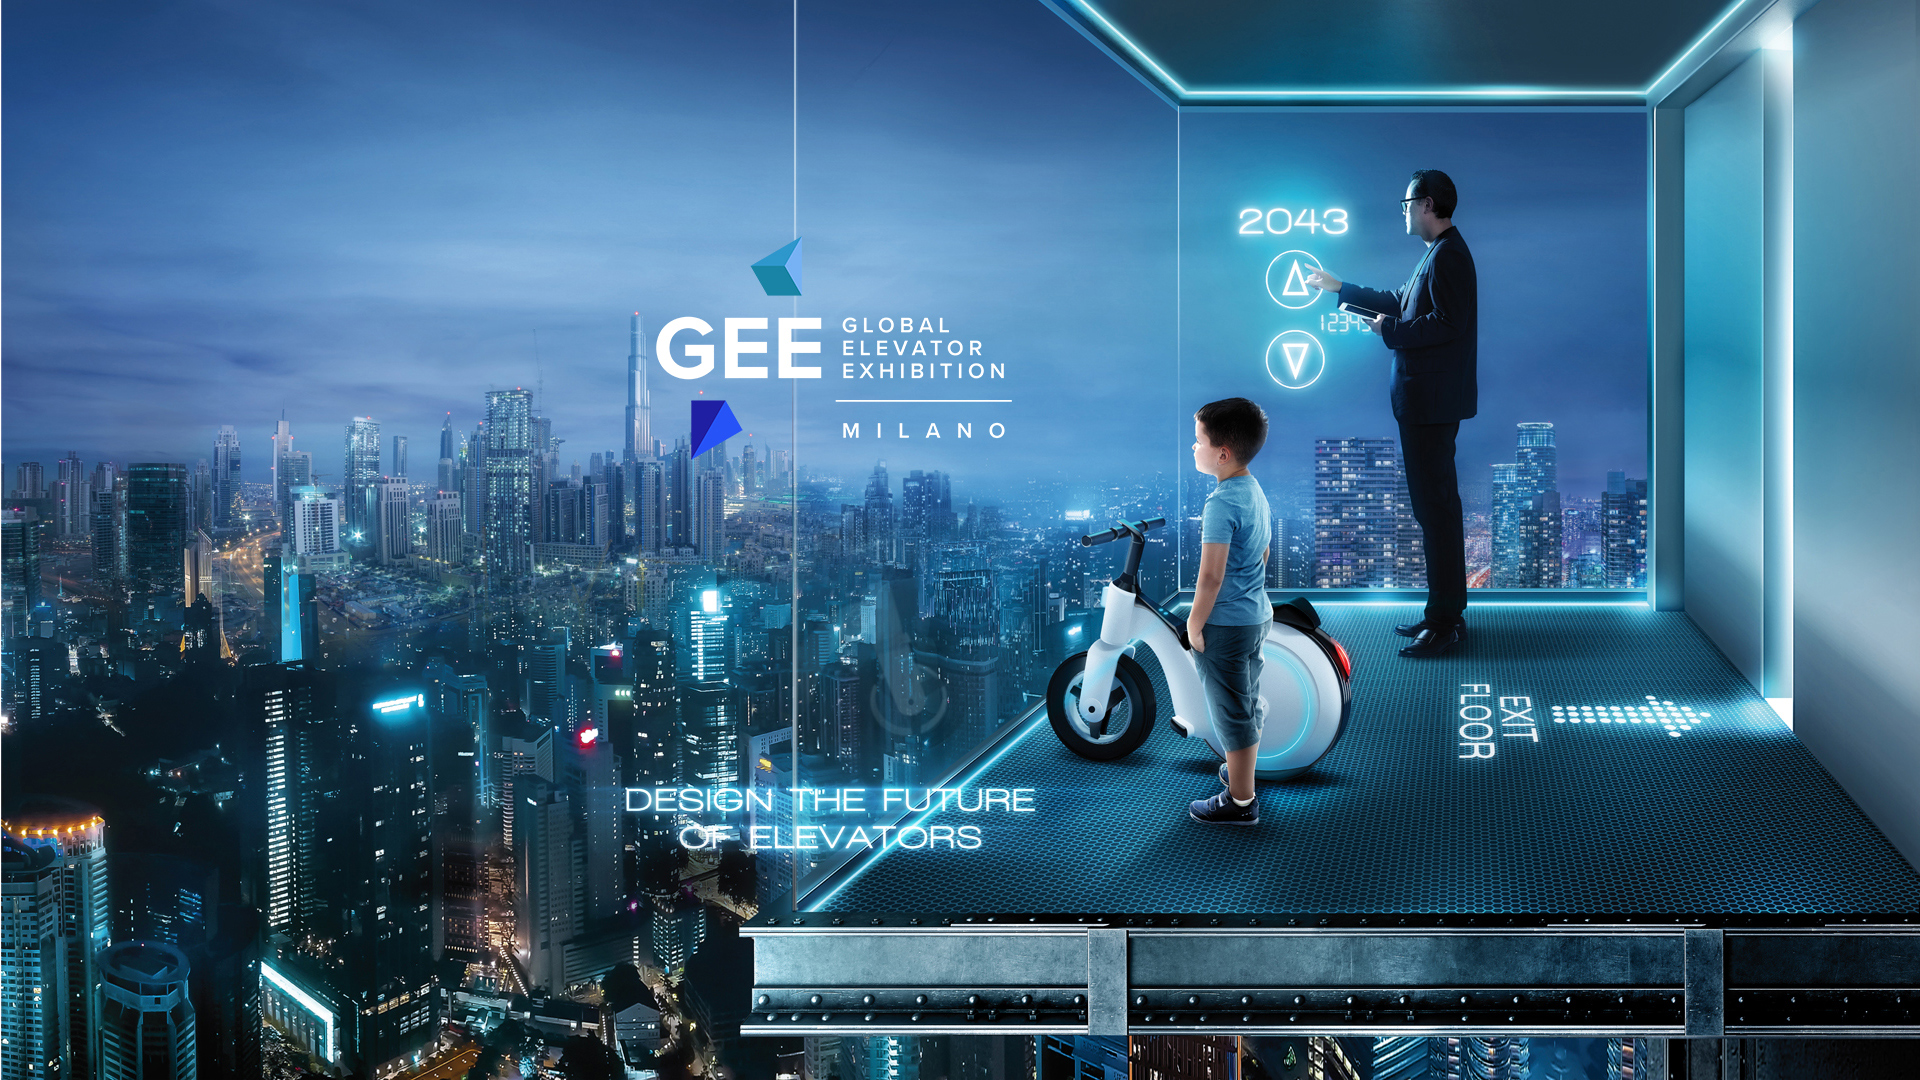 GEE, Global Elevator Exhibition, Milano